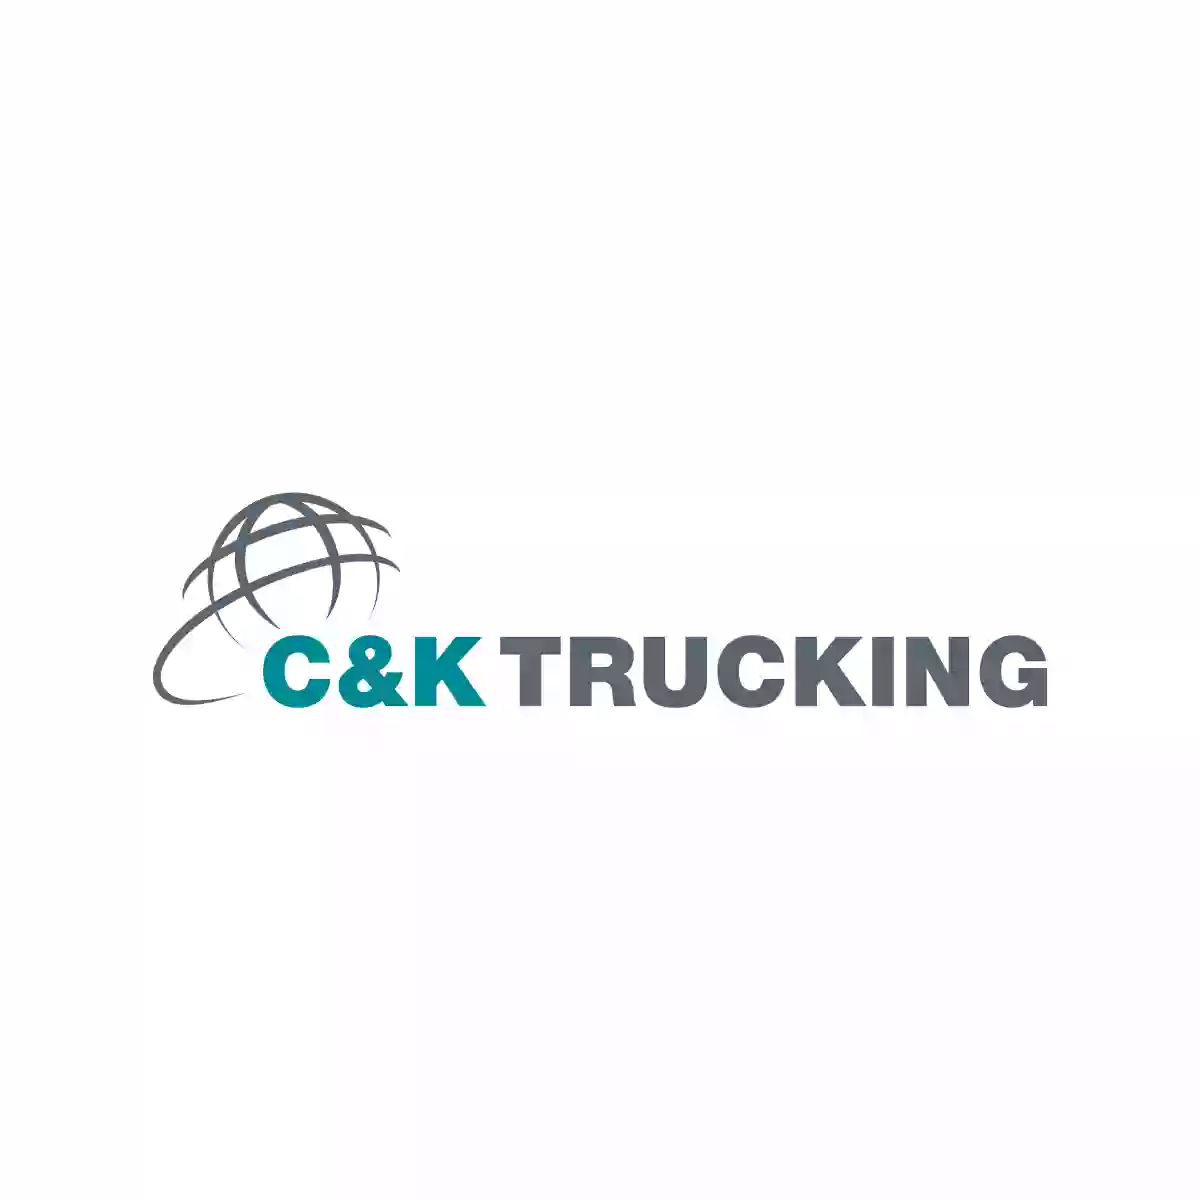 C&K Trucking